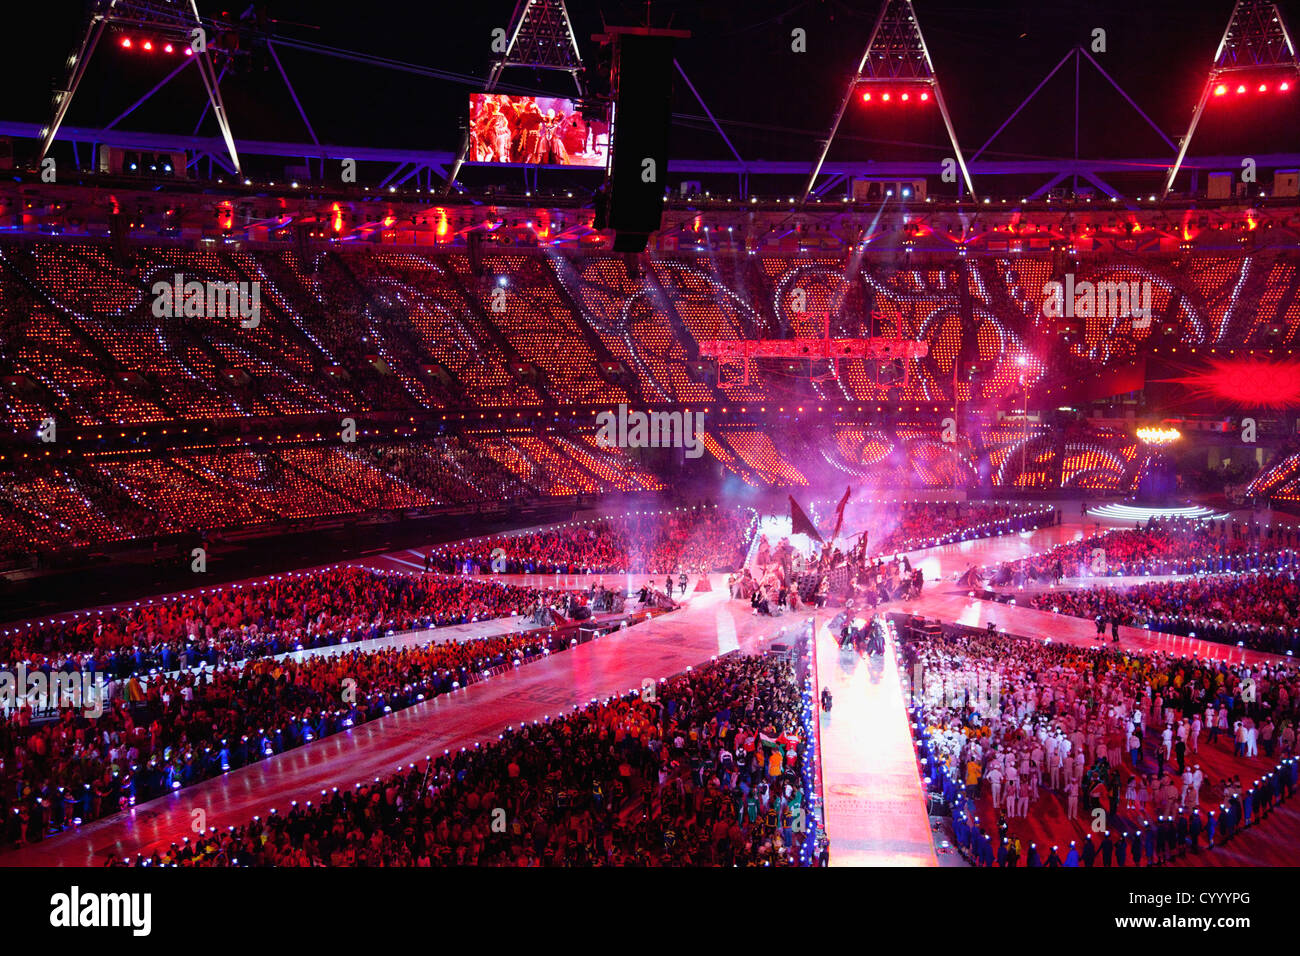 Inghilterra, Londra, Stratford, giochi olimpici cerimonia di chiusura red light display in stadium. Foto Stock